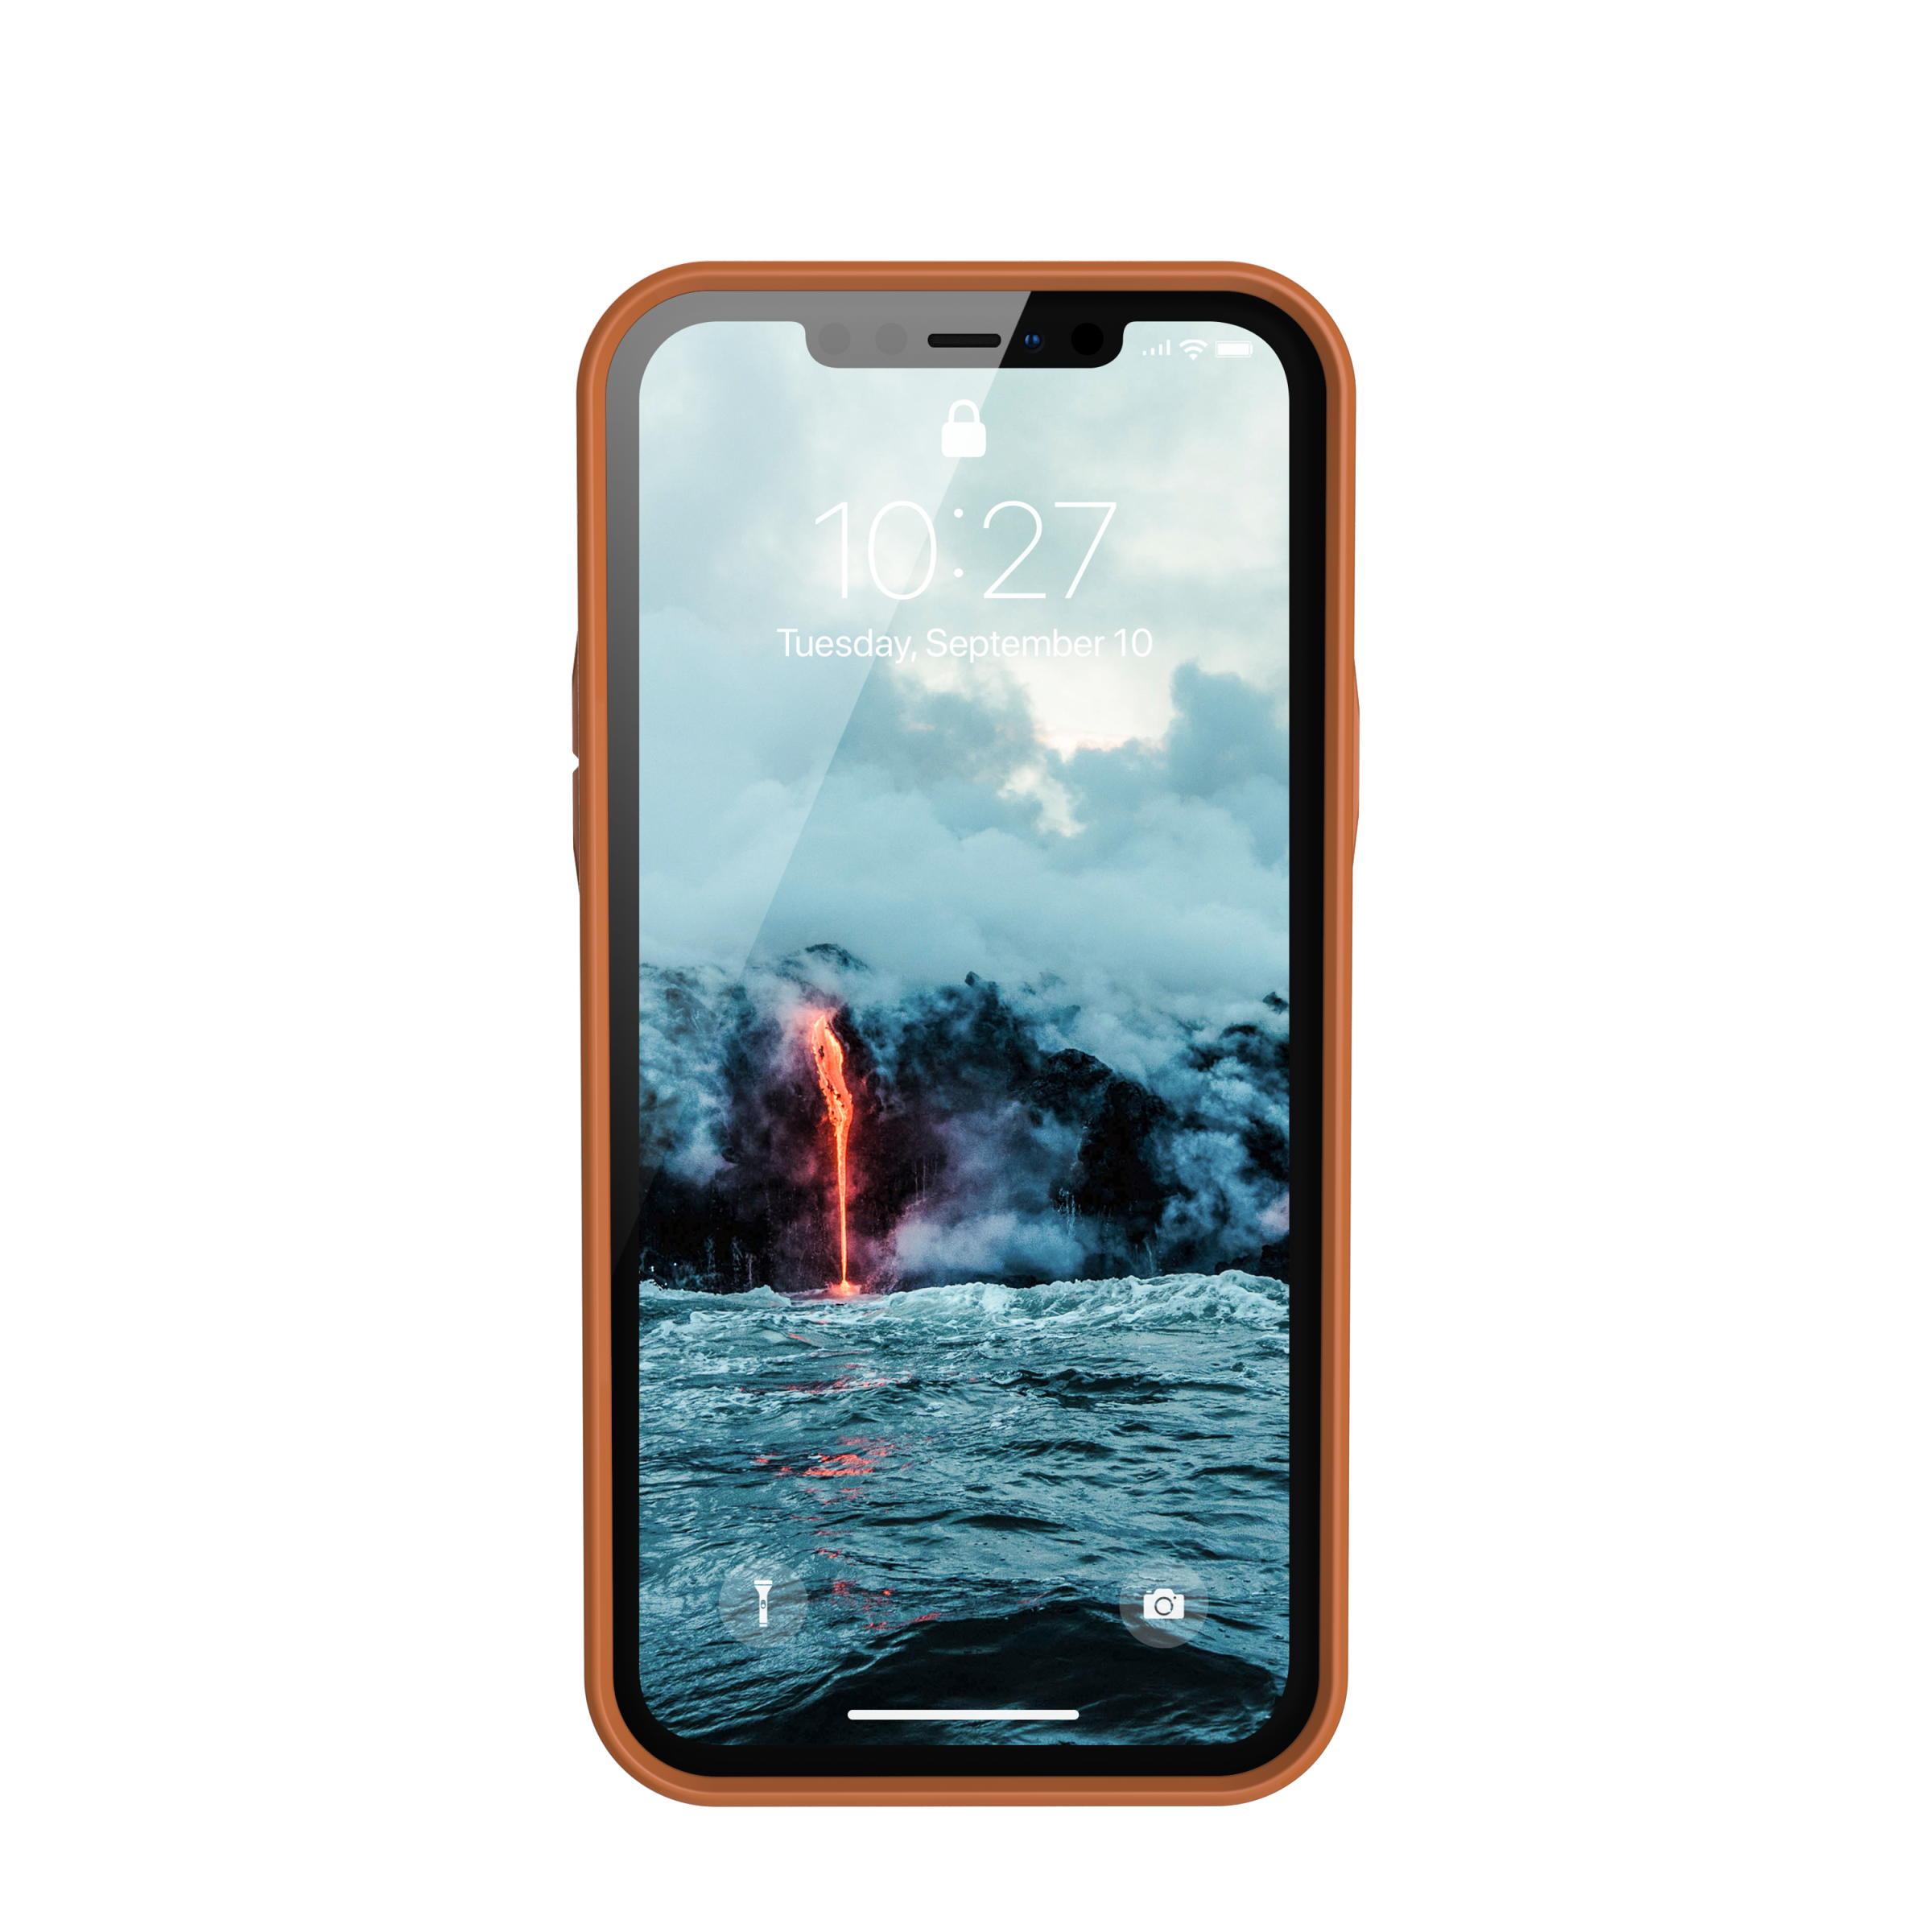 Outback Bio Case iPhone 12 Pro Max Orange